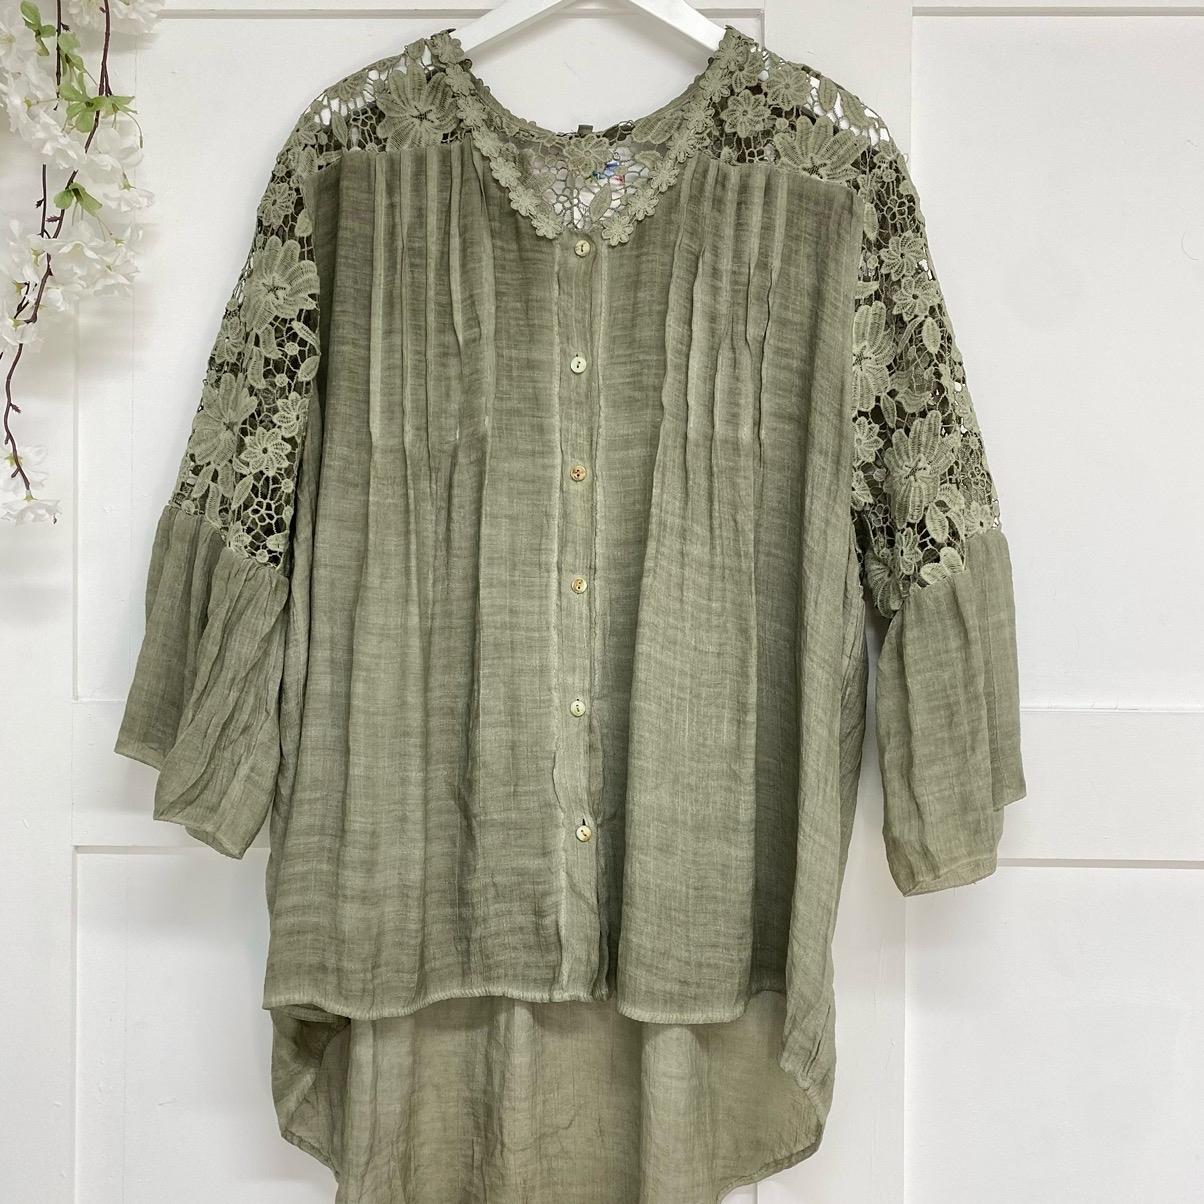 Leoni: Lightweight cotton floaty lace shirt. One Size 12-22